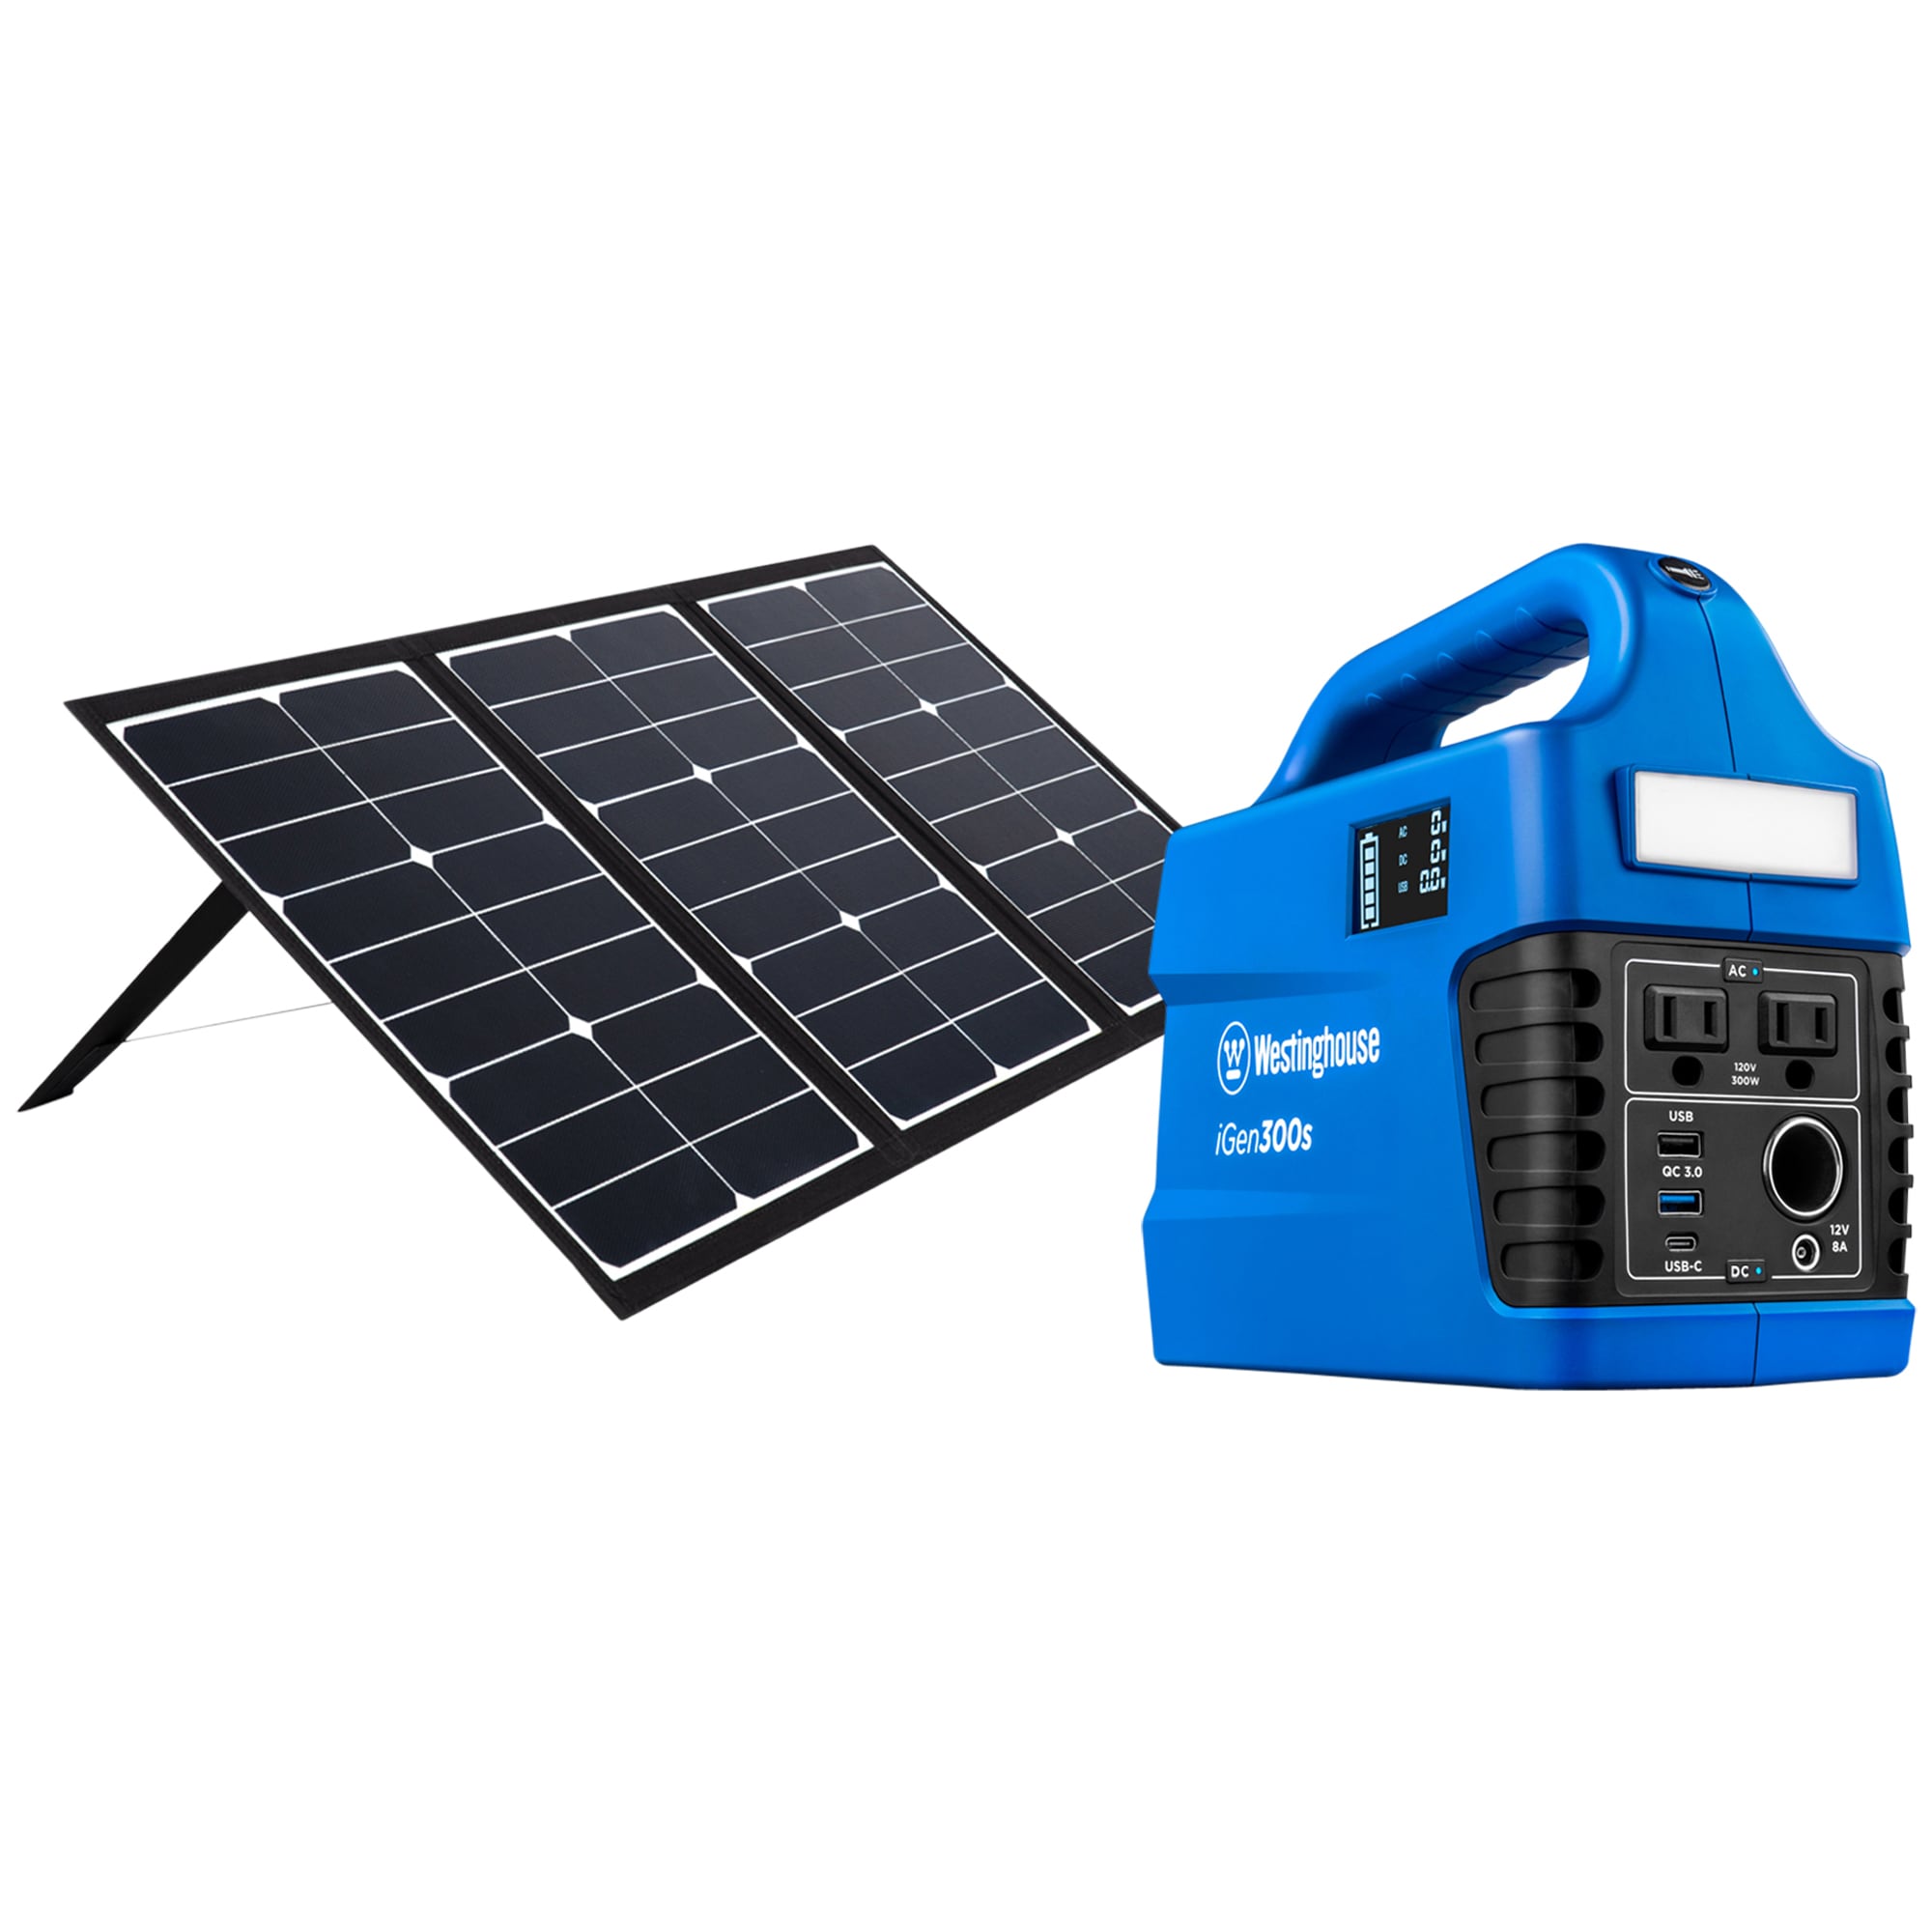 Portable Power Station, Solar Panels & Solar Generators Kits